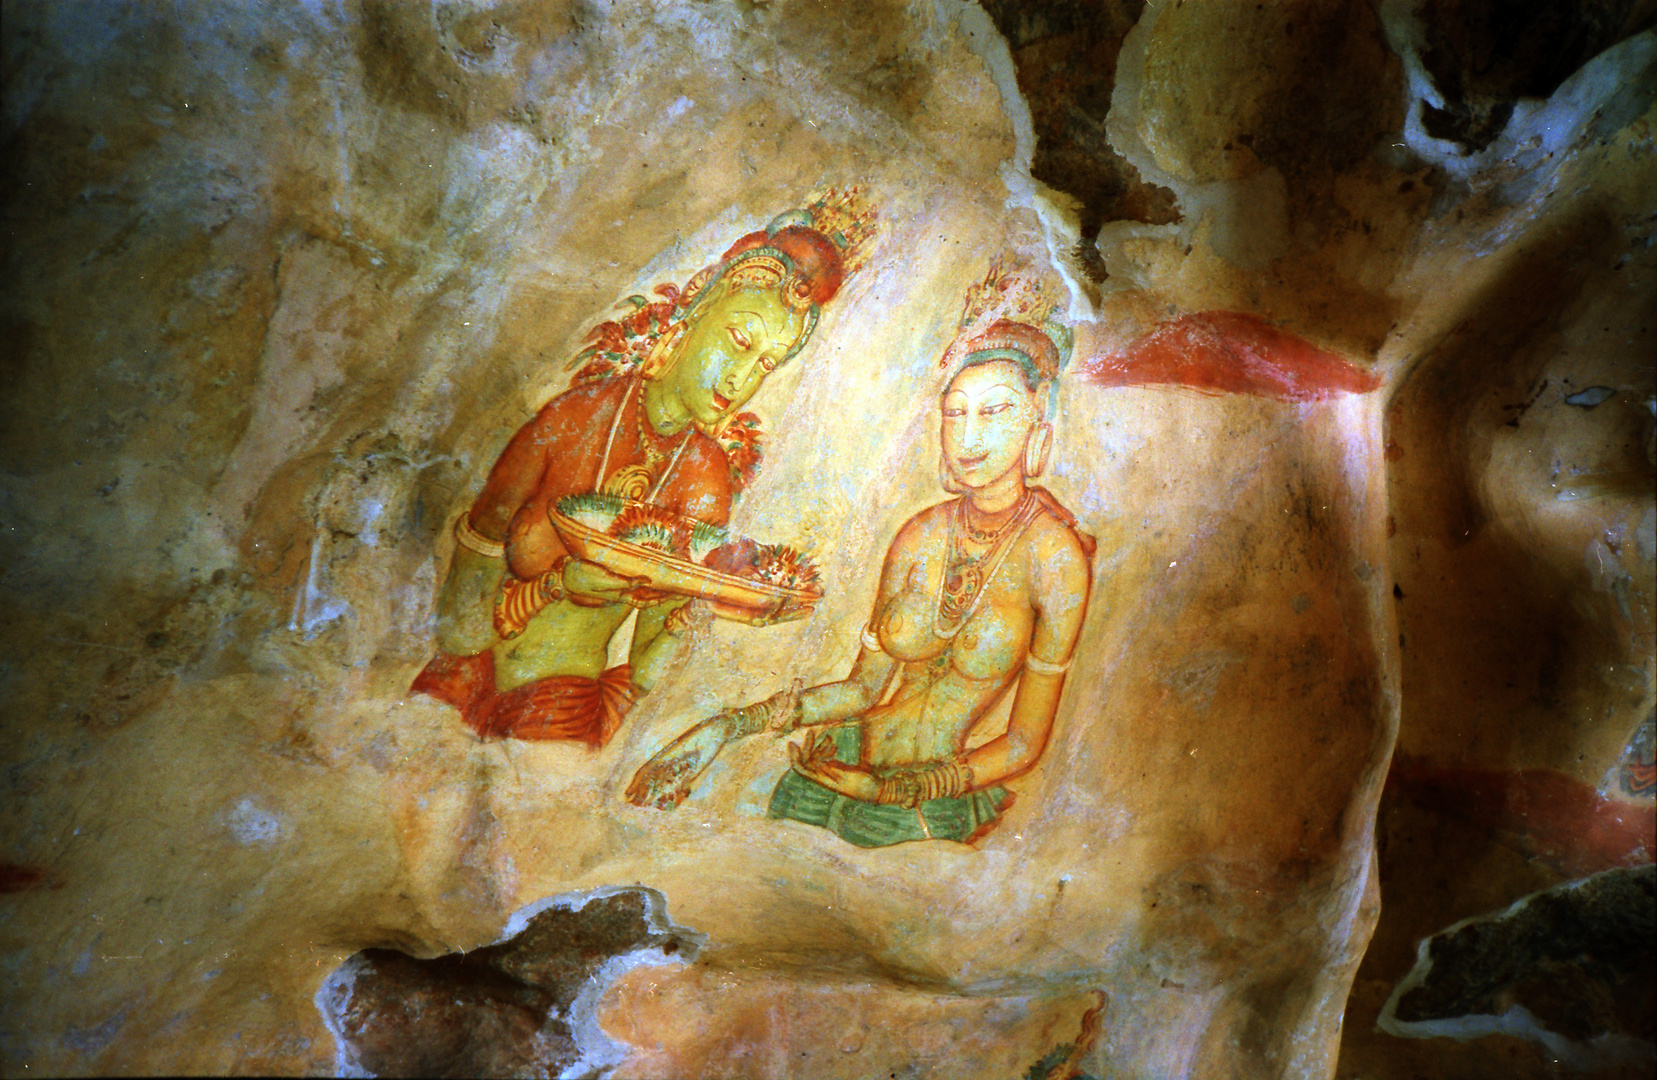 Painting on the Sigiriya